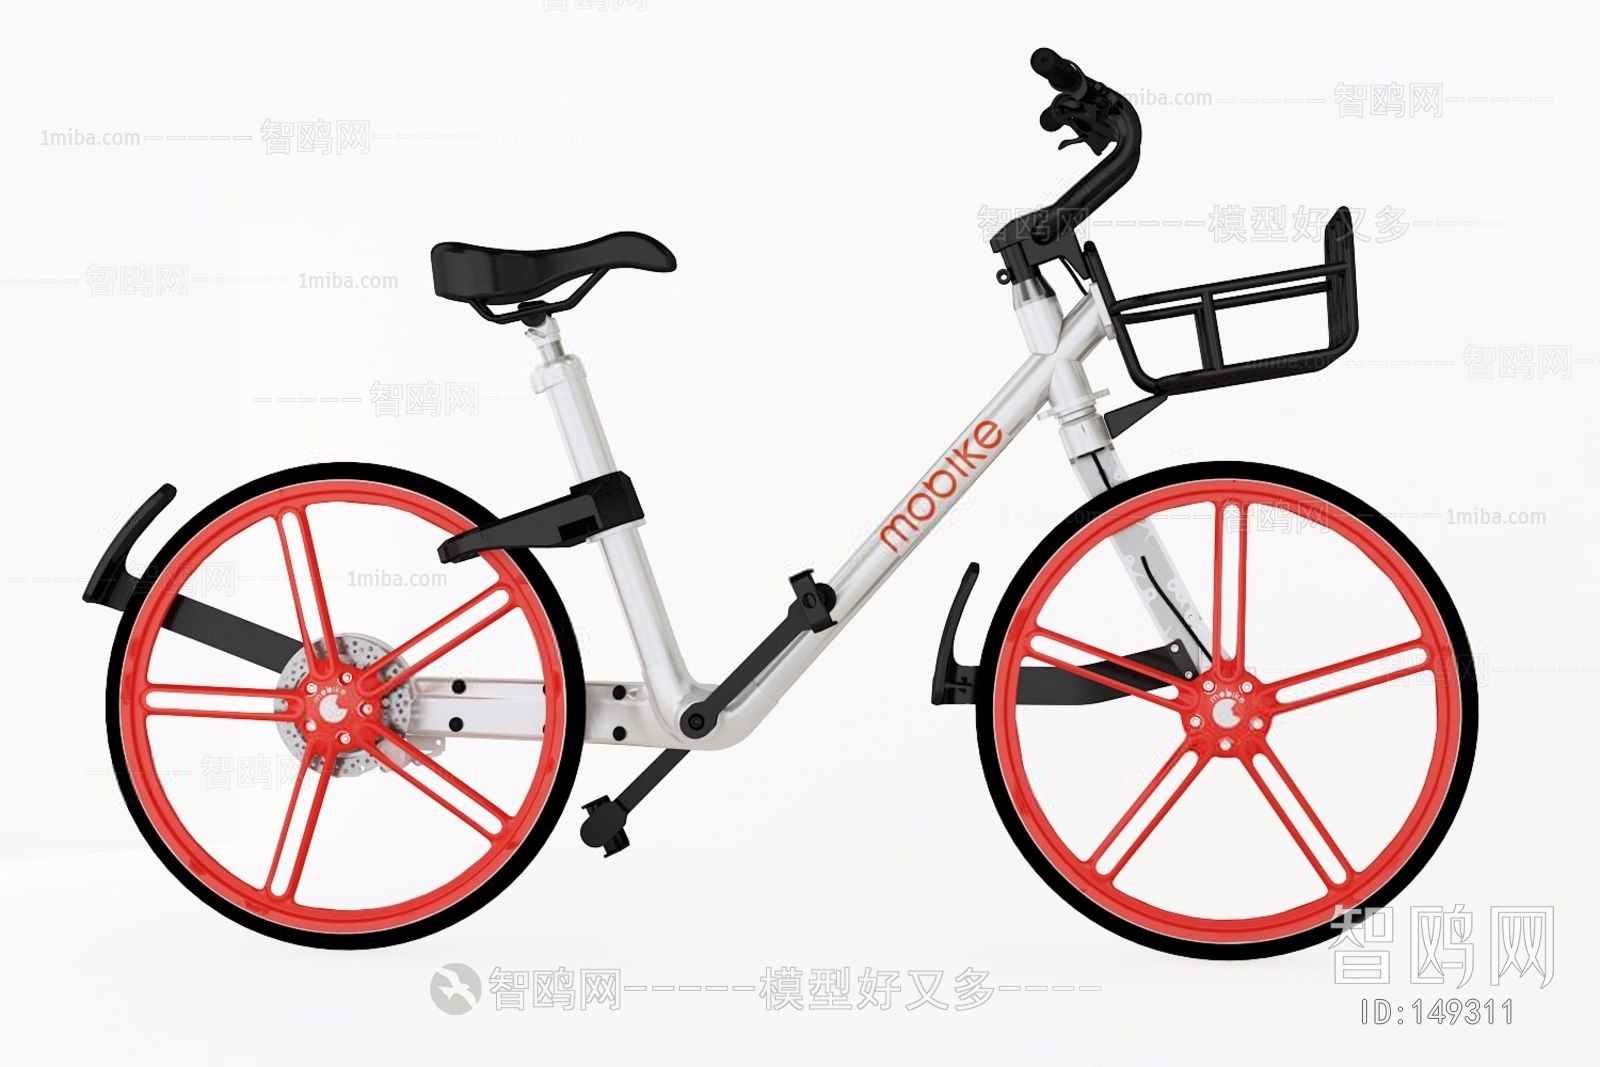 Modern Bicycle